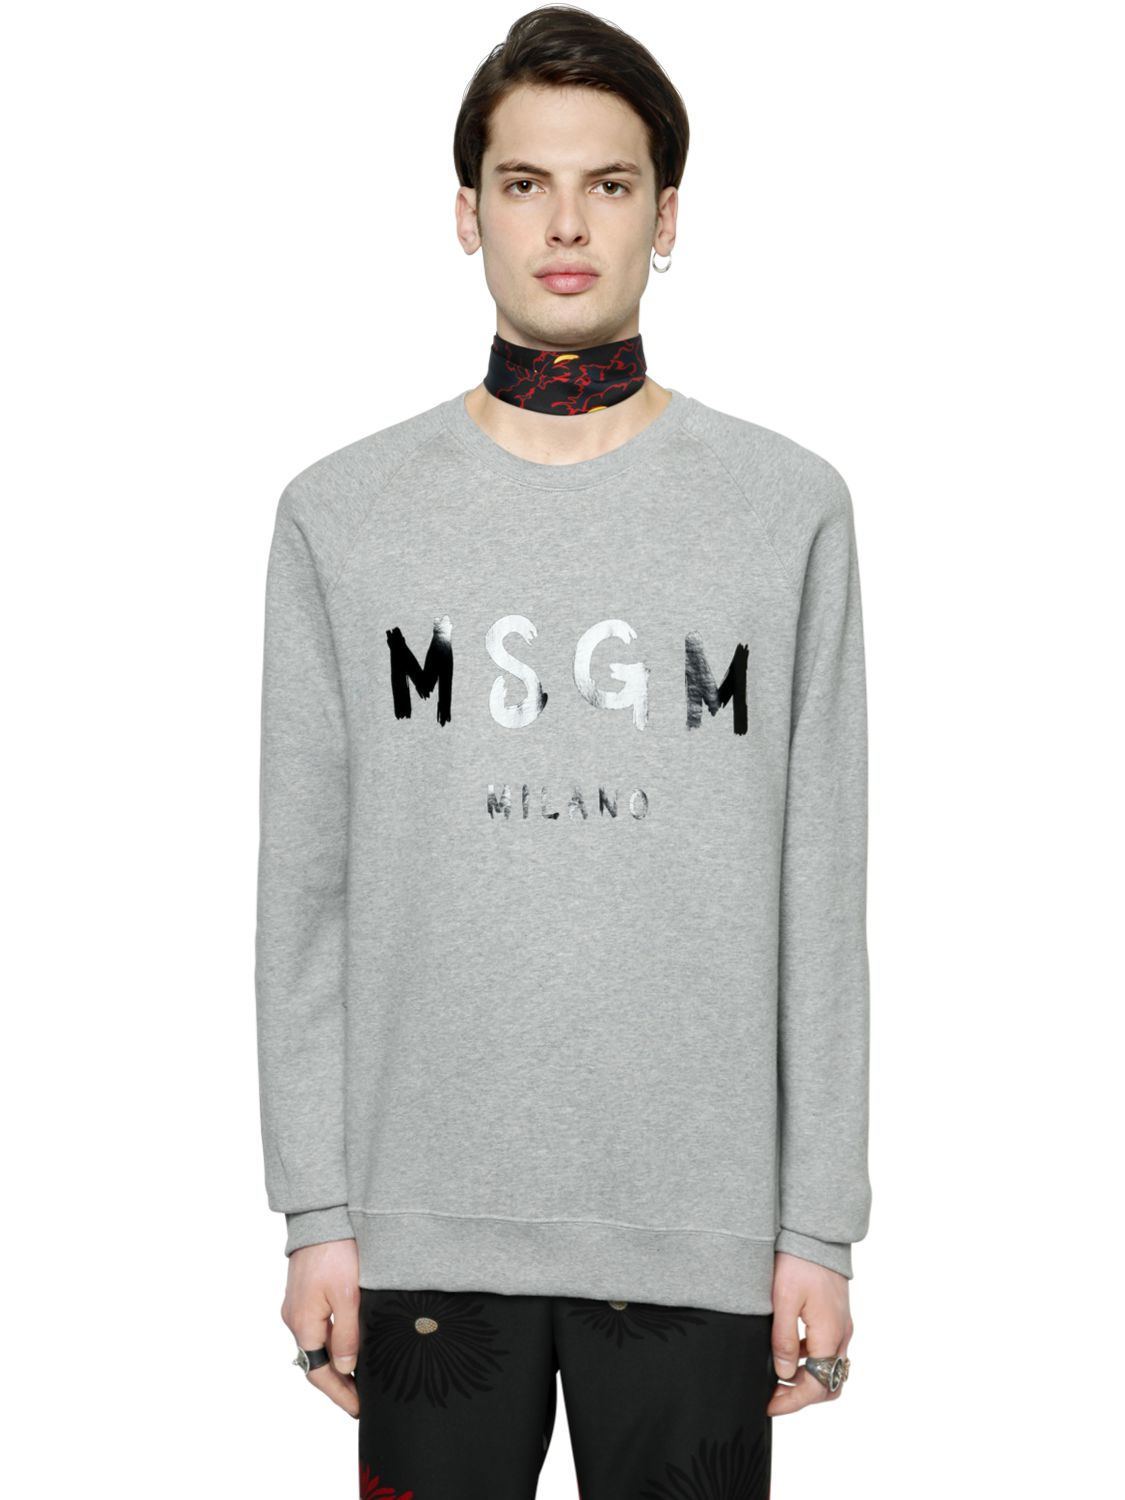 Lyst - Msgm Vinyl Logo Cotton Sweatshirt in Gray for Men